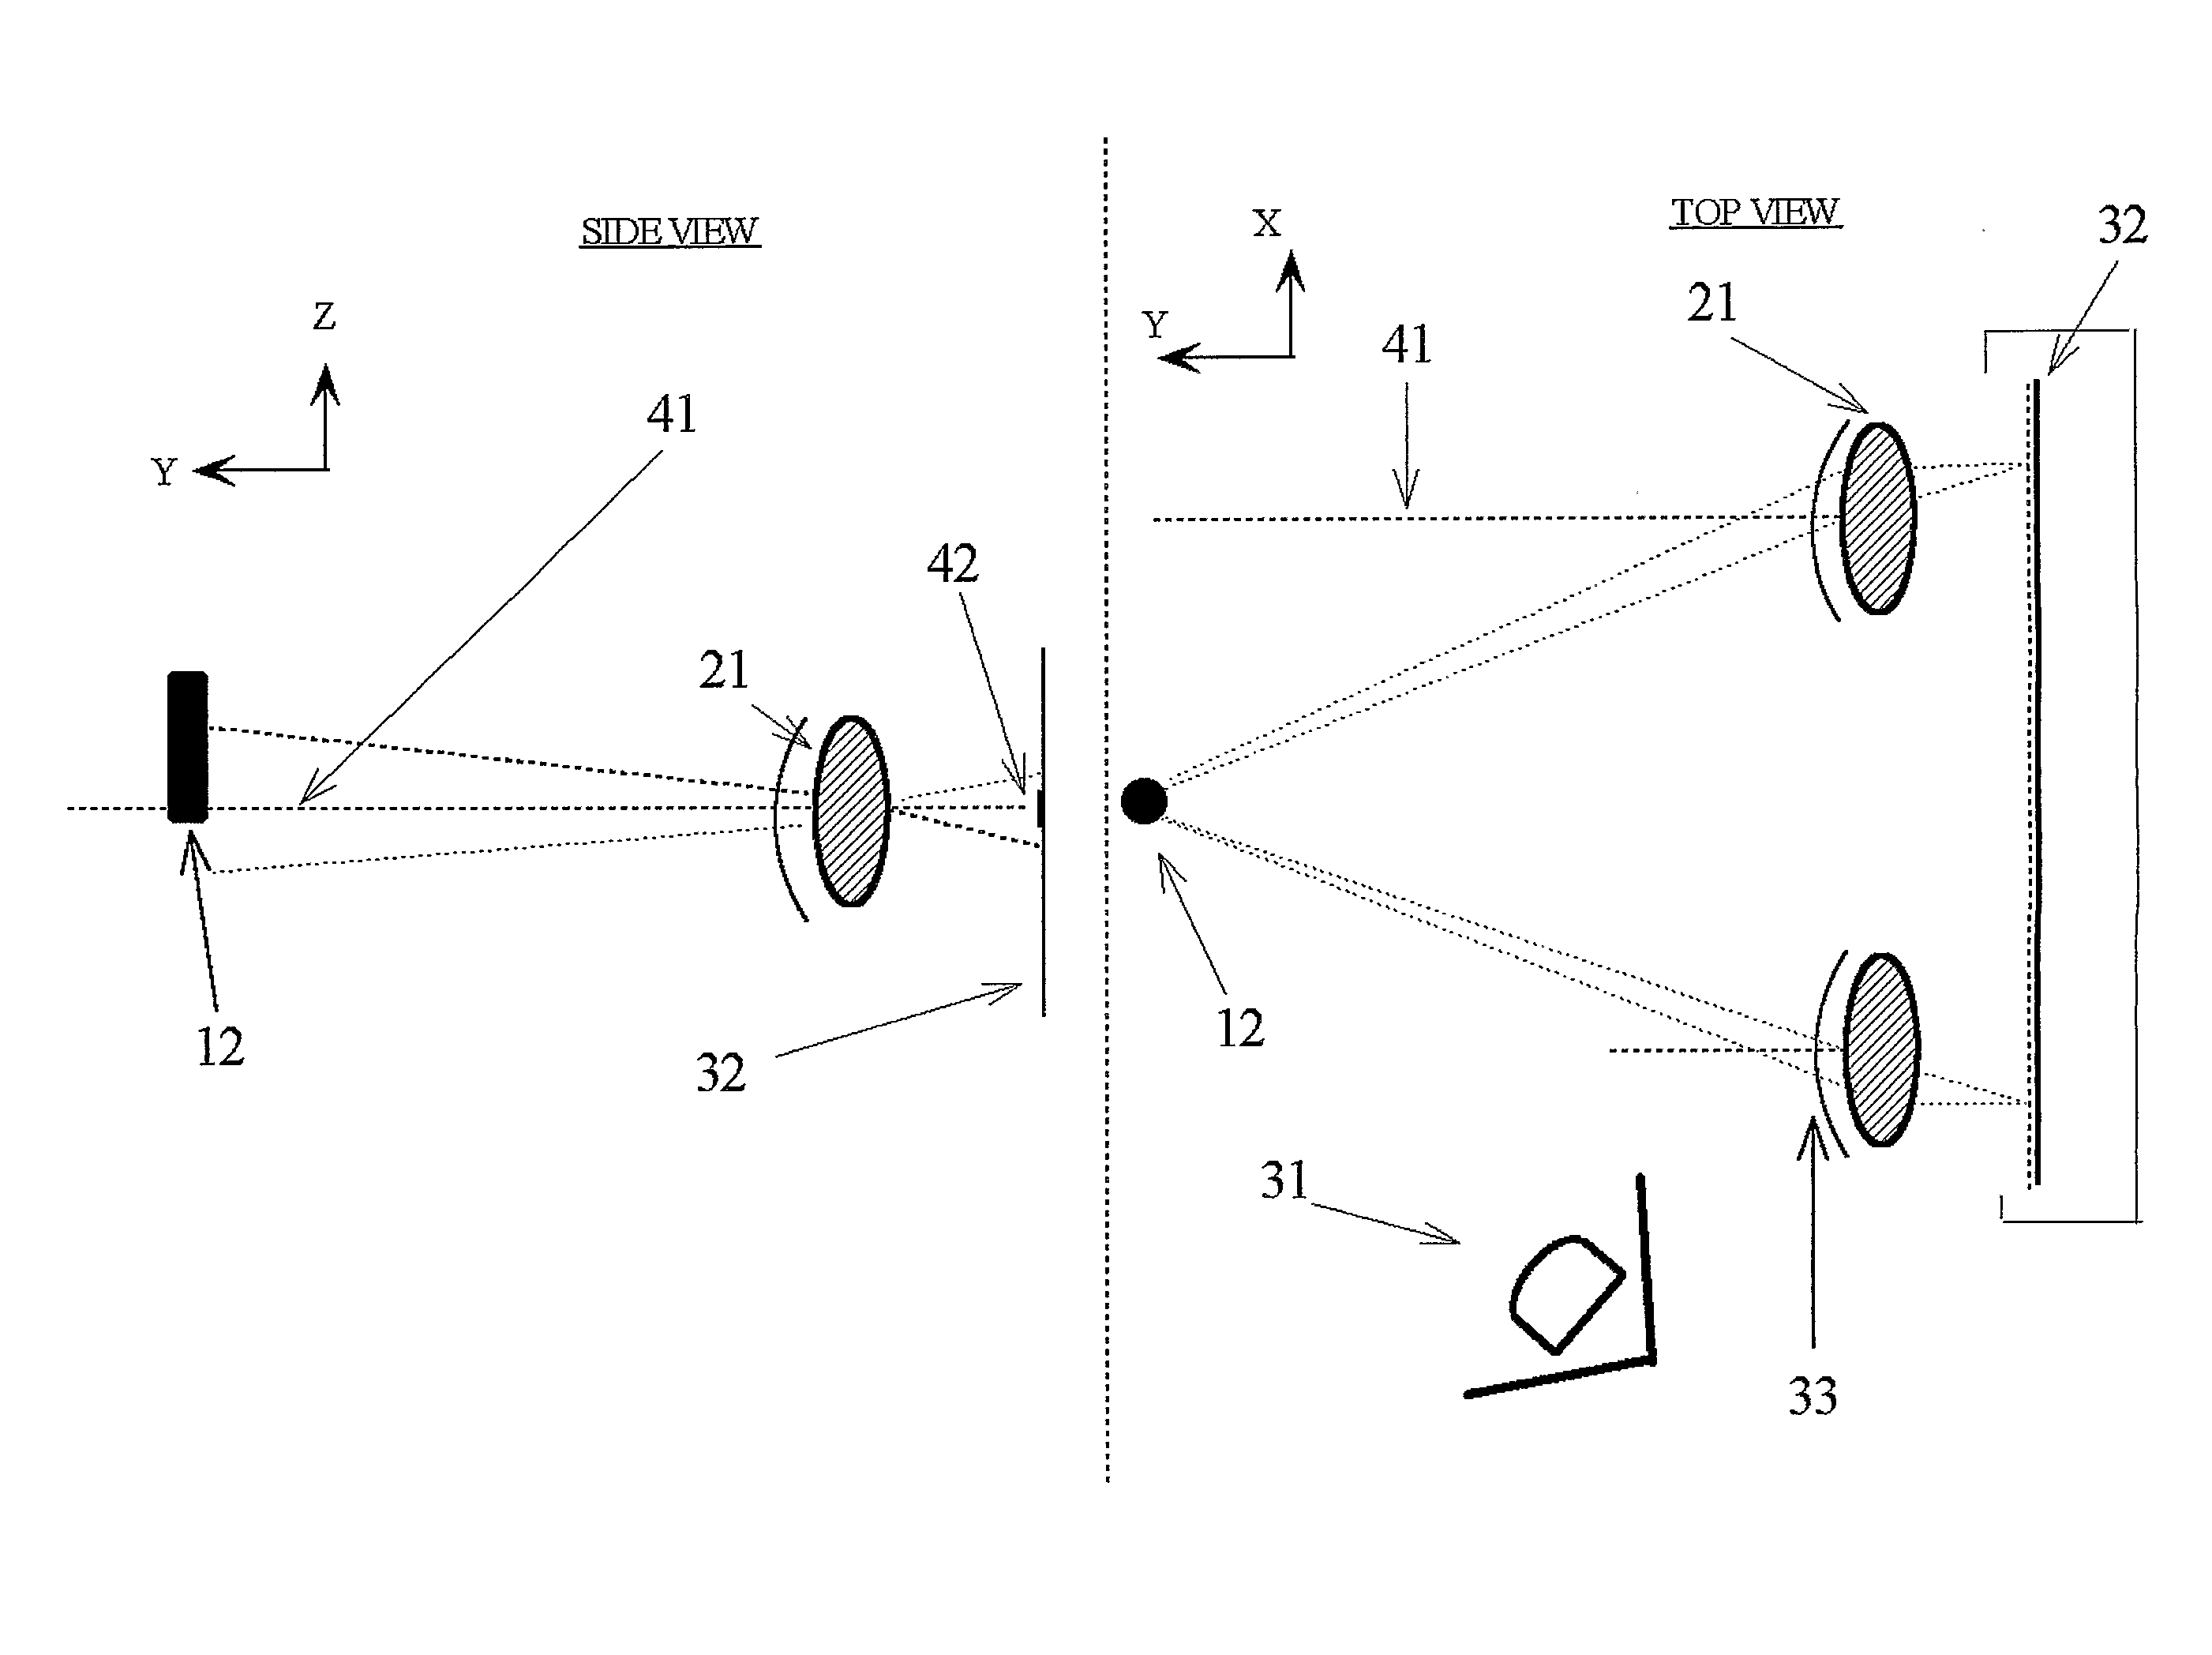 Optical coordinate input device comprising few elements